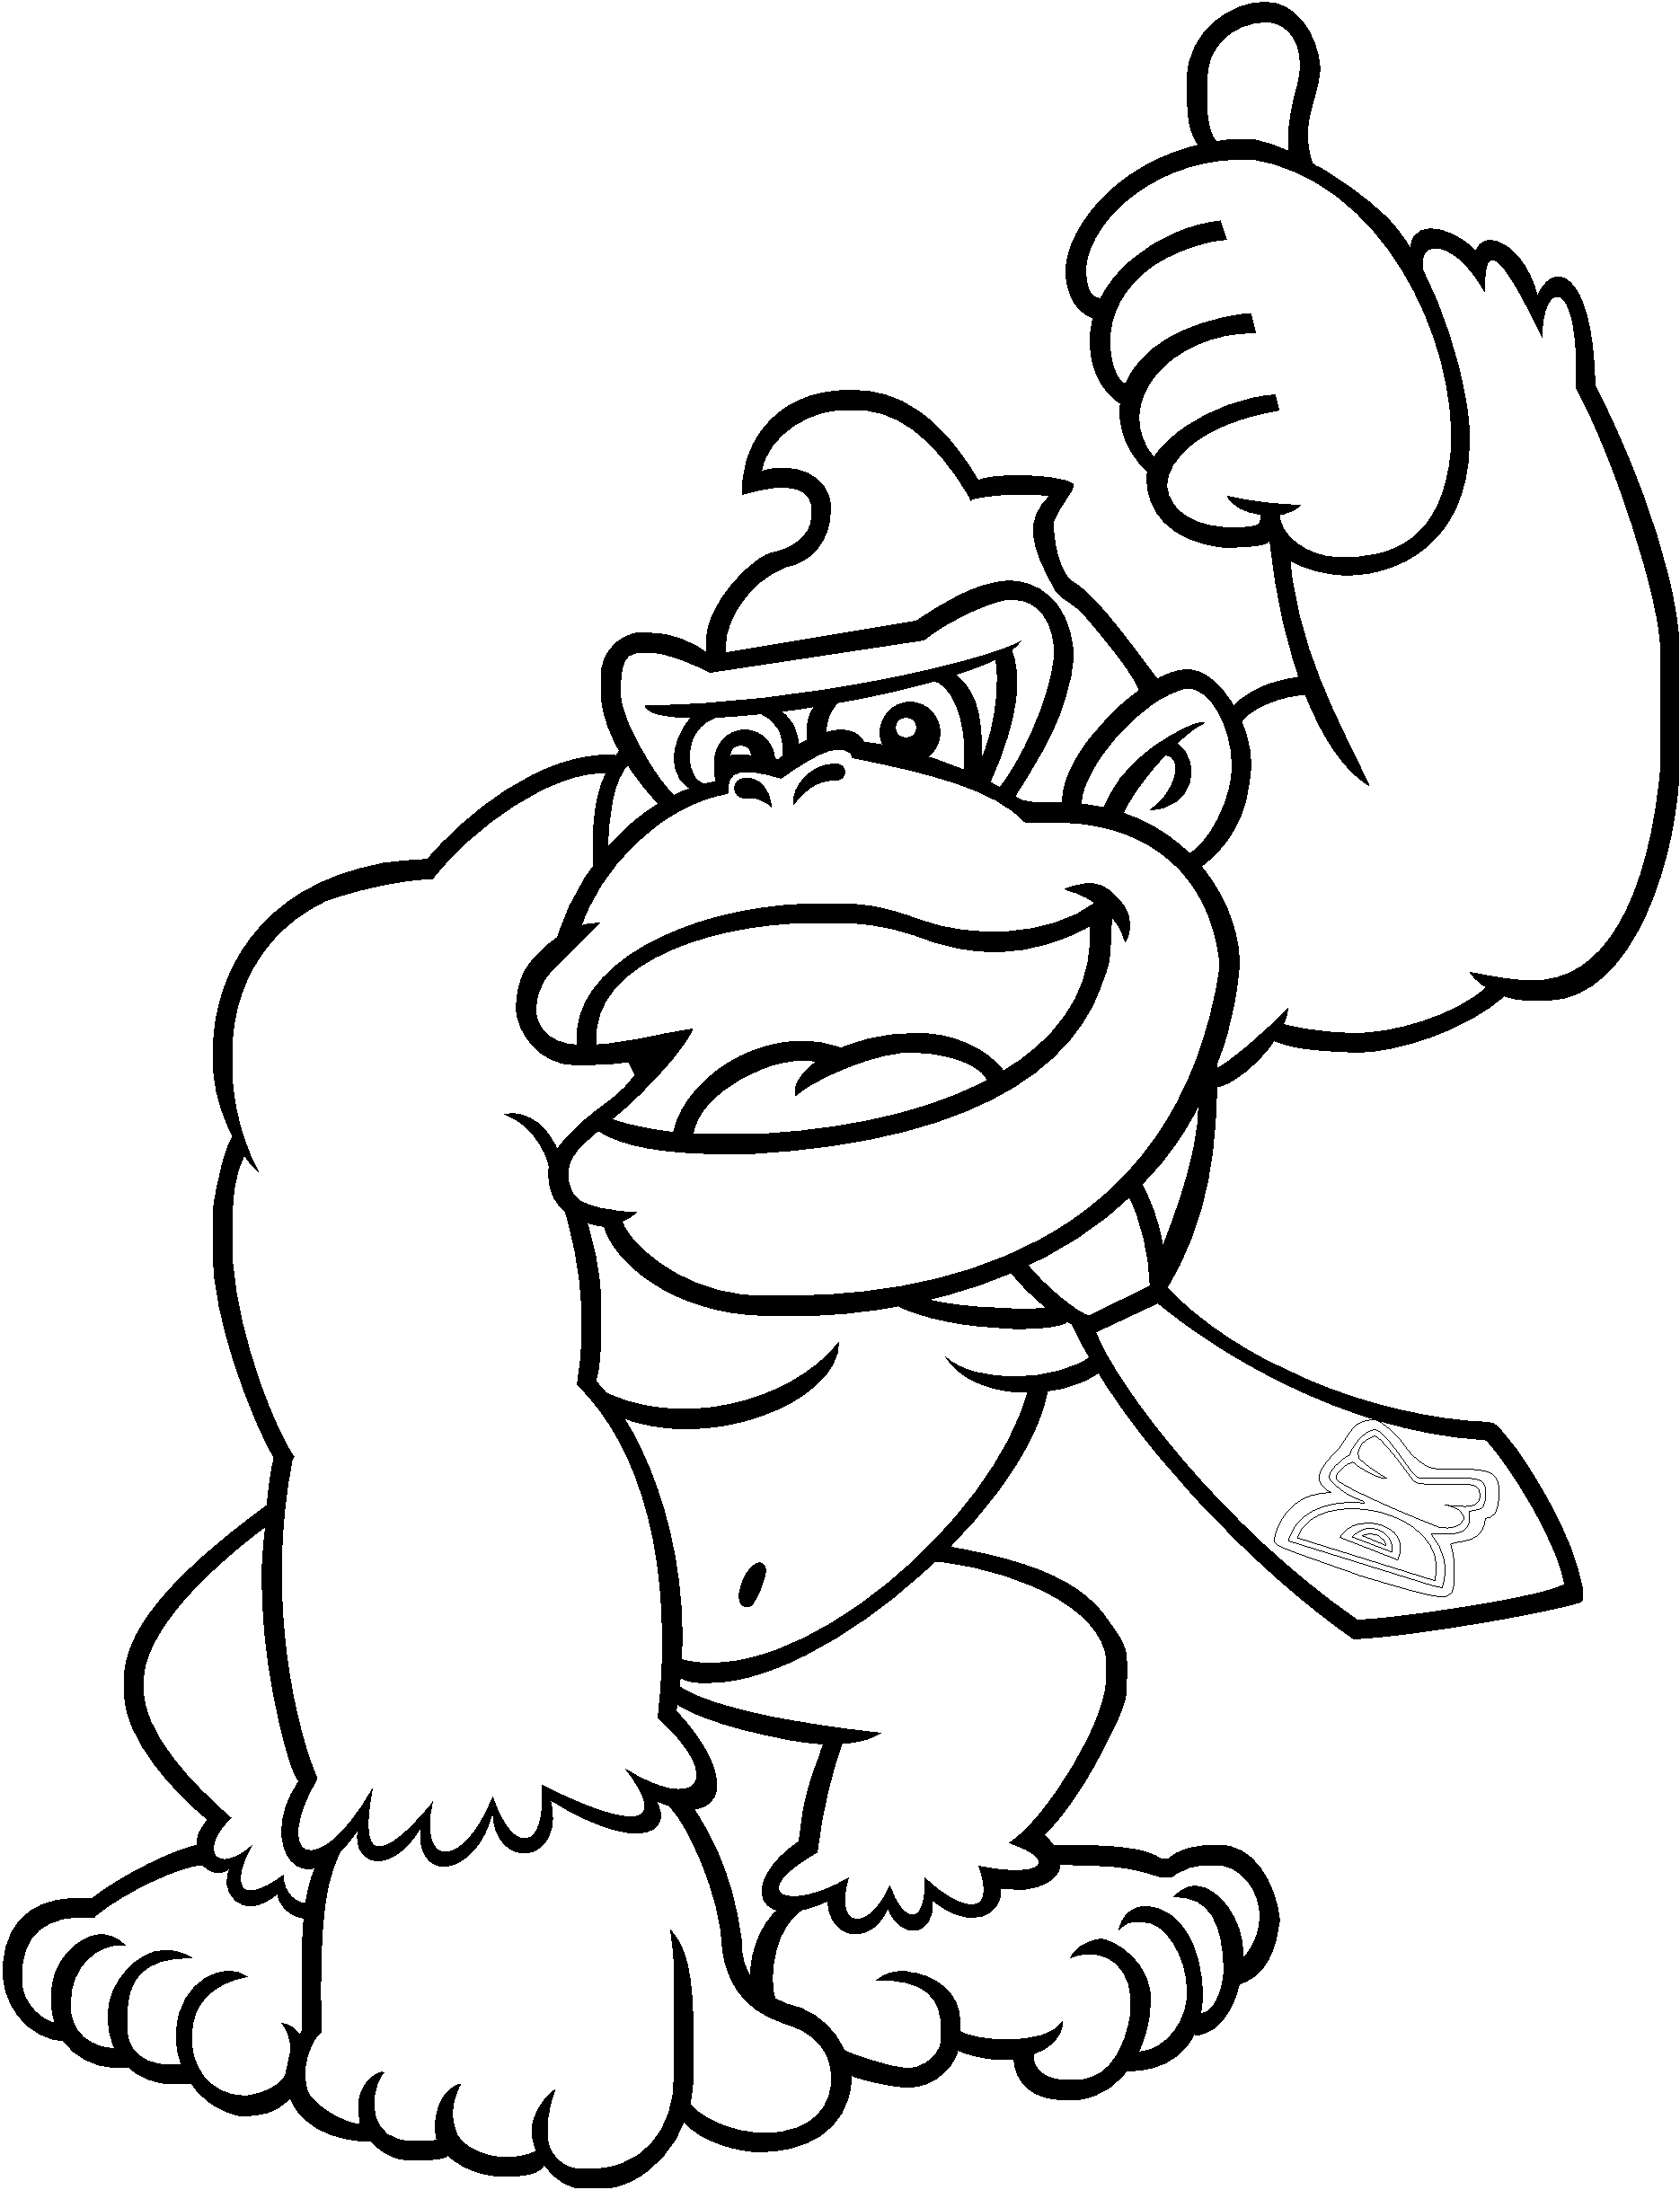 Donkey Kong duim omhoog